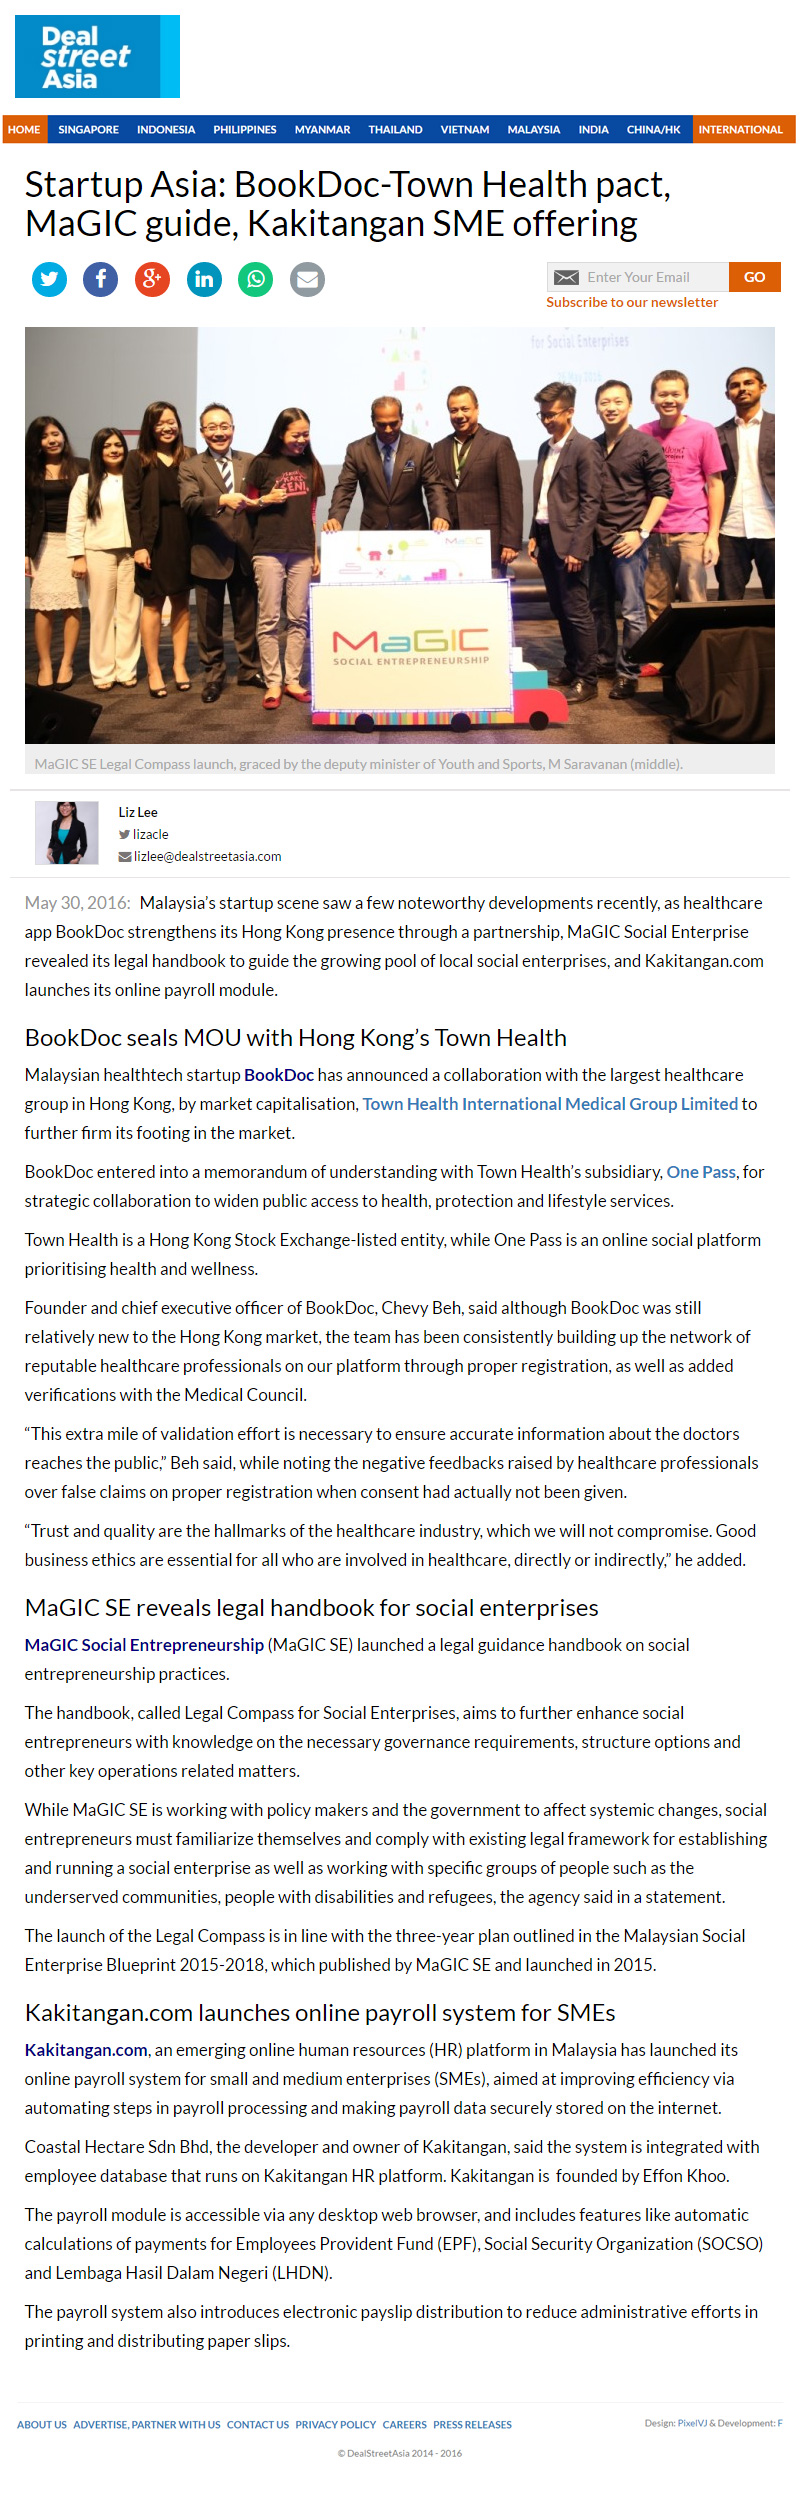 Startup Digest: BookDoc partners HK’s Town Health, MaGIC SE’s legal handbook, Kakitangan.com’s online payroll system